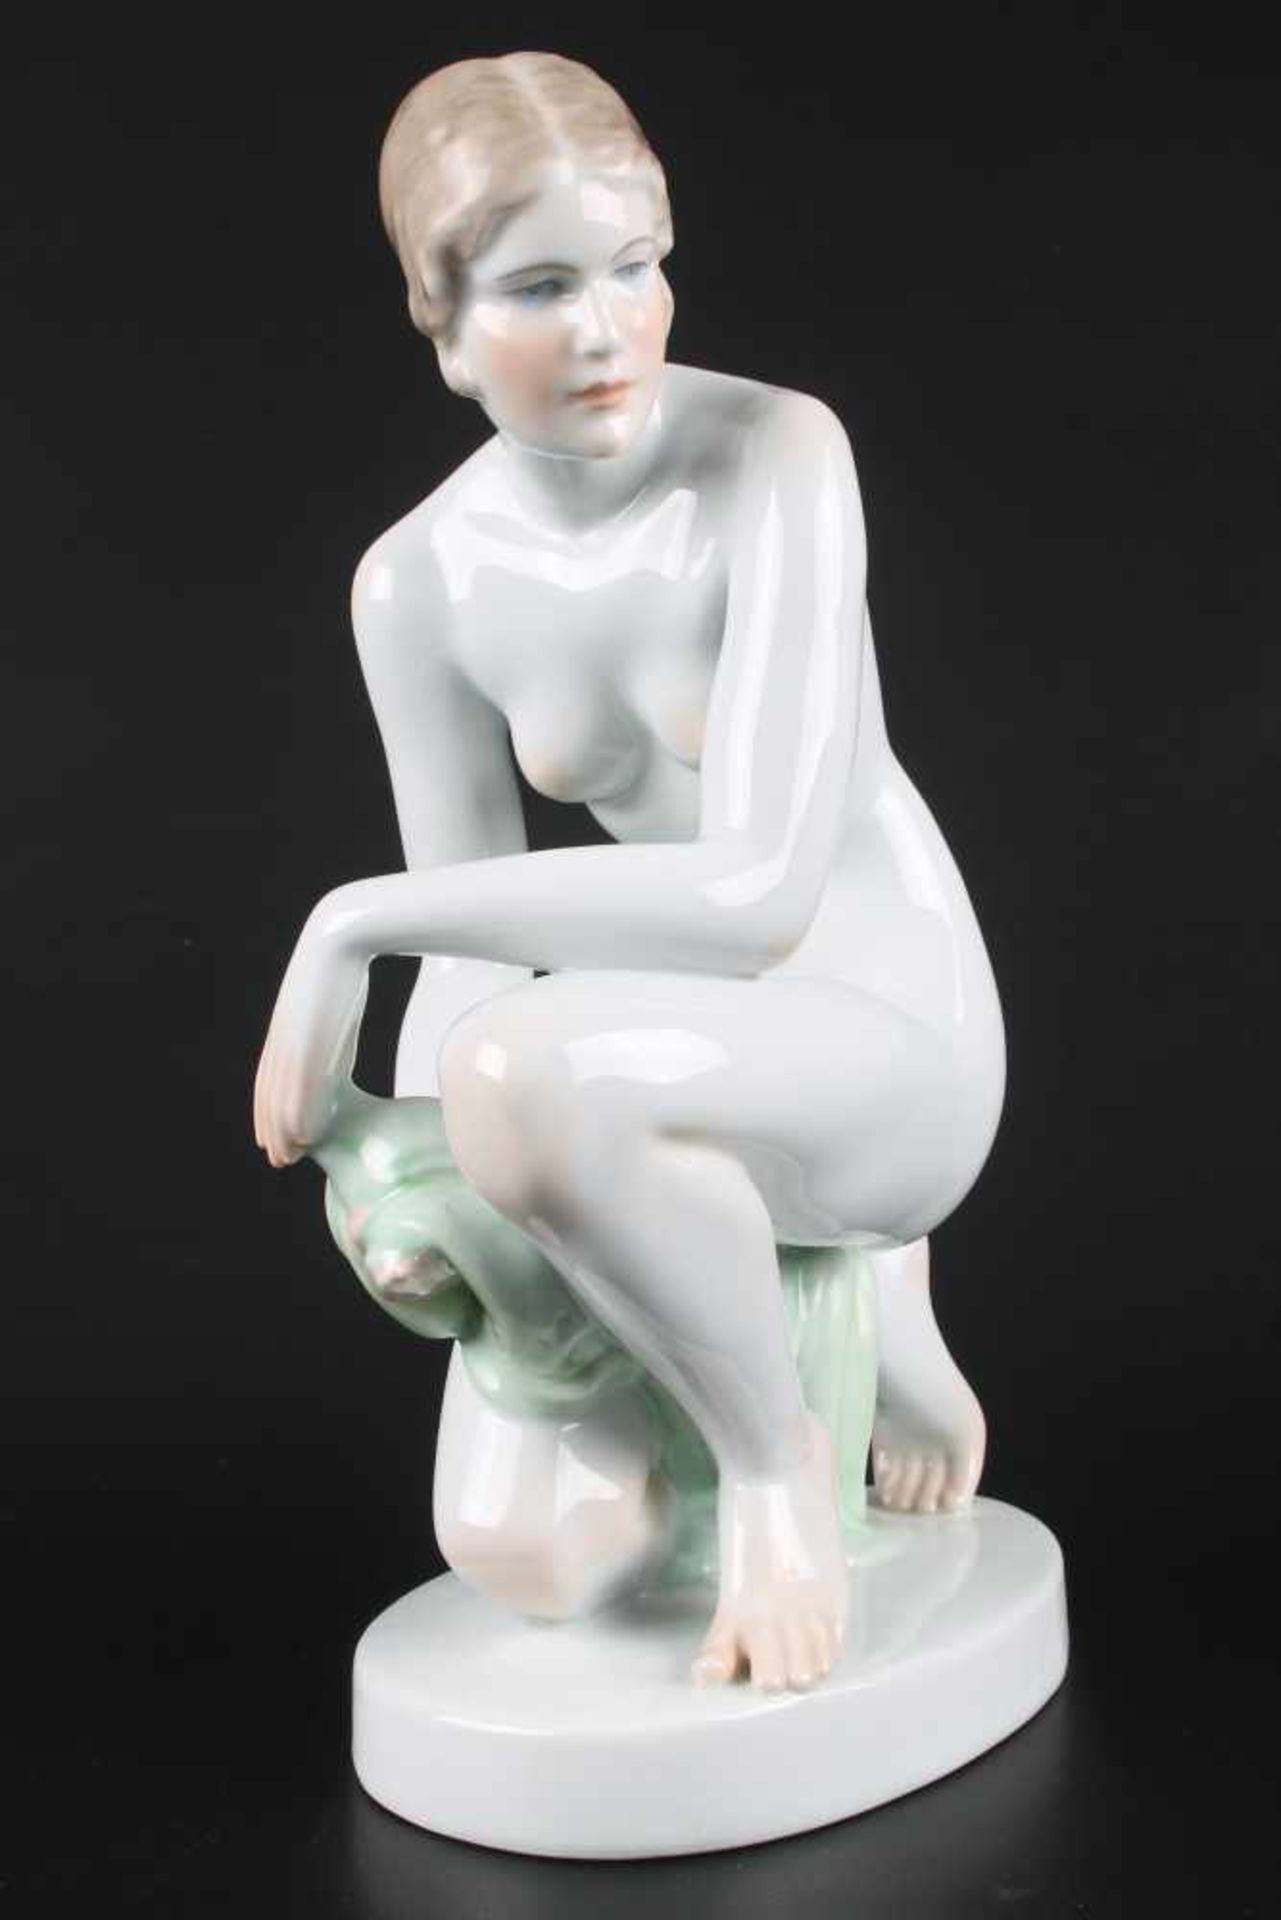 Herend Porzellanfigur - Kniender Frauenakt, kneeling female nude act,Porzellan, Ungarn 20.